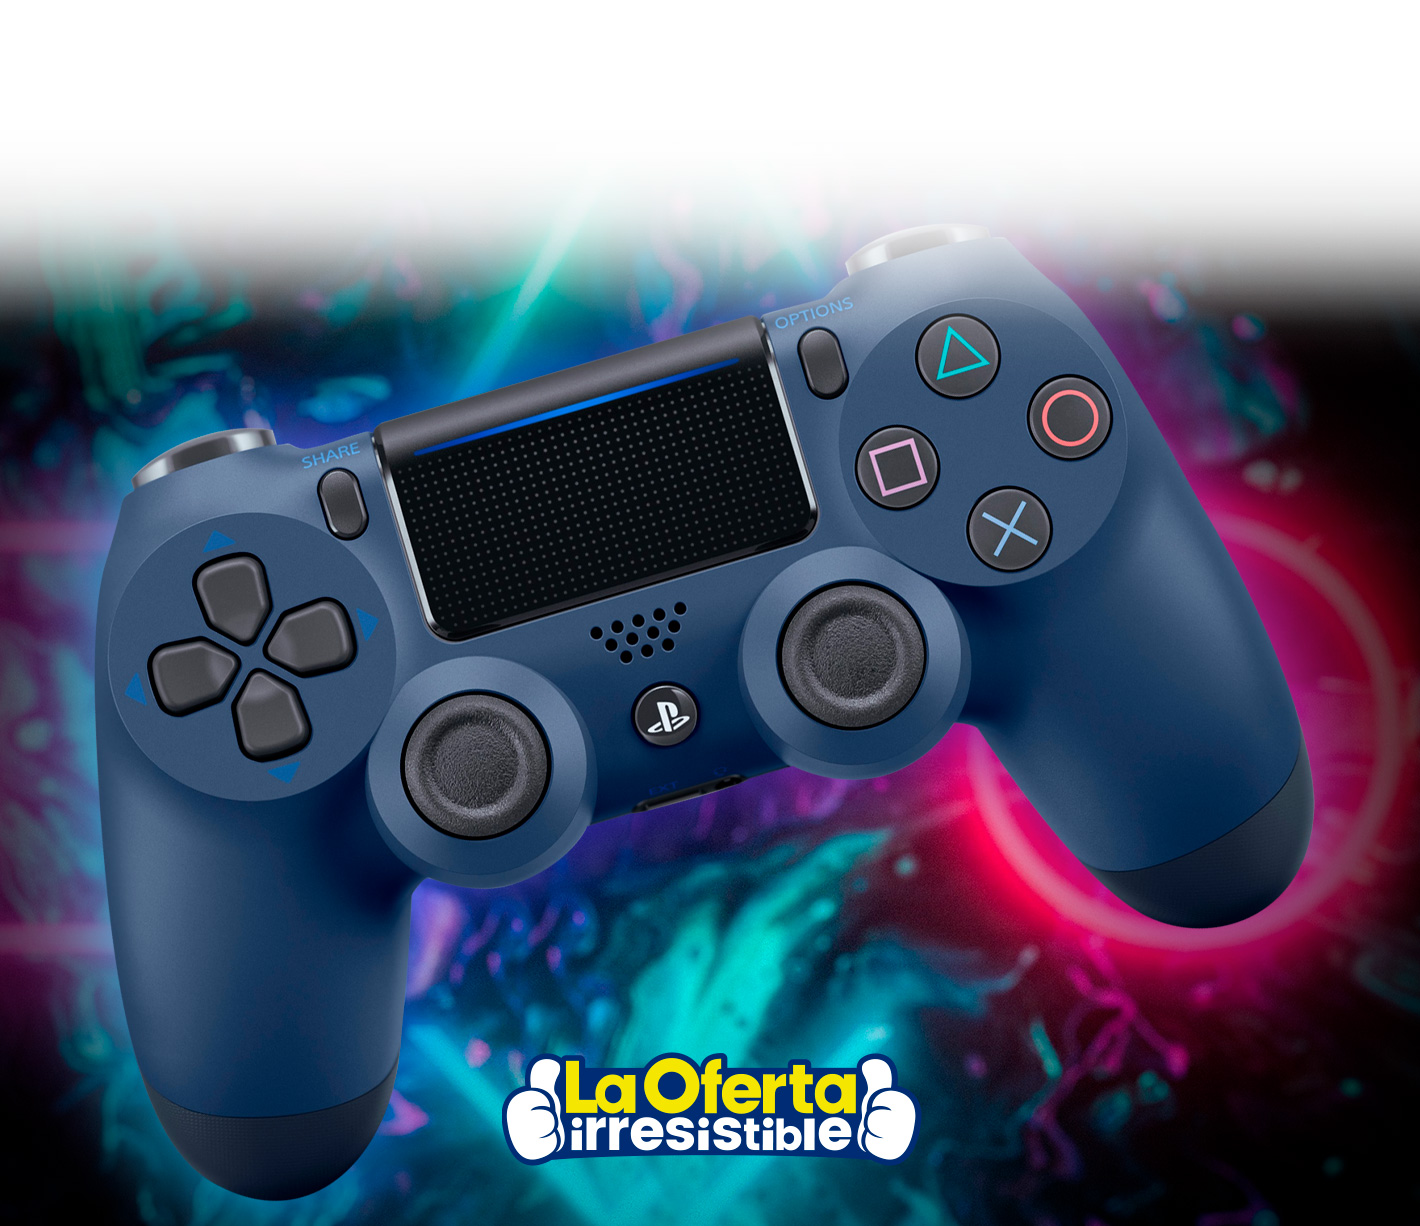 Joystick Ps4 Dualshock 4 Inalámbrico Original Color Midnight blue